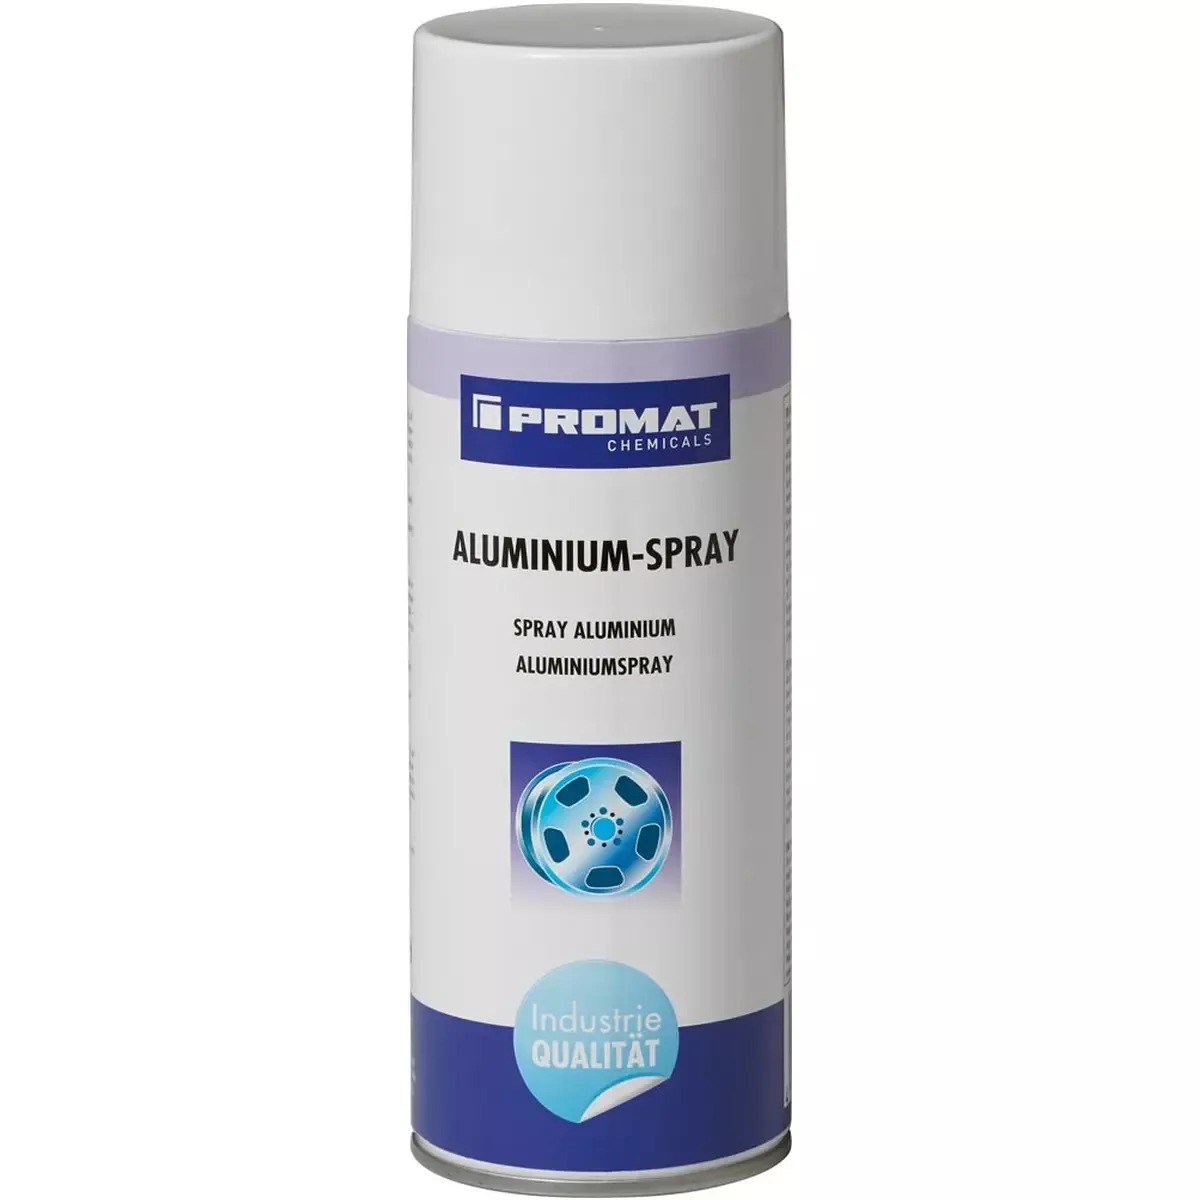 Aluminiumspray, Inhalt 400 ml, temperaturbeständig bis +300 Grad C, Spraydose